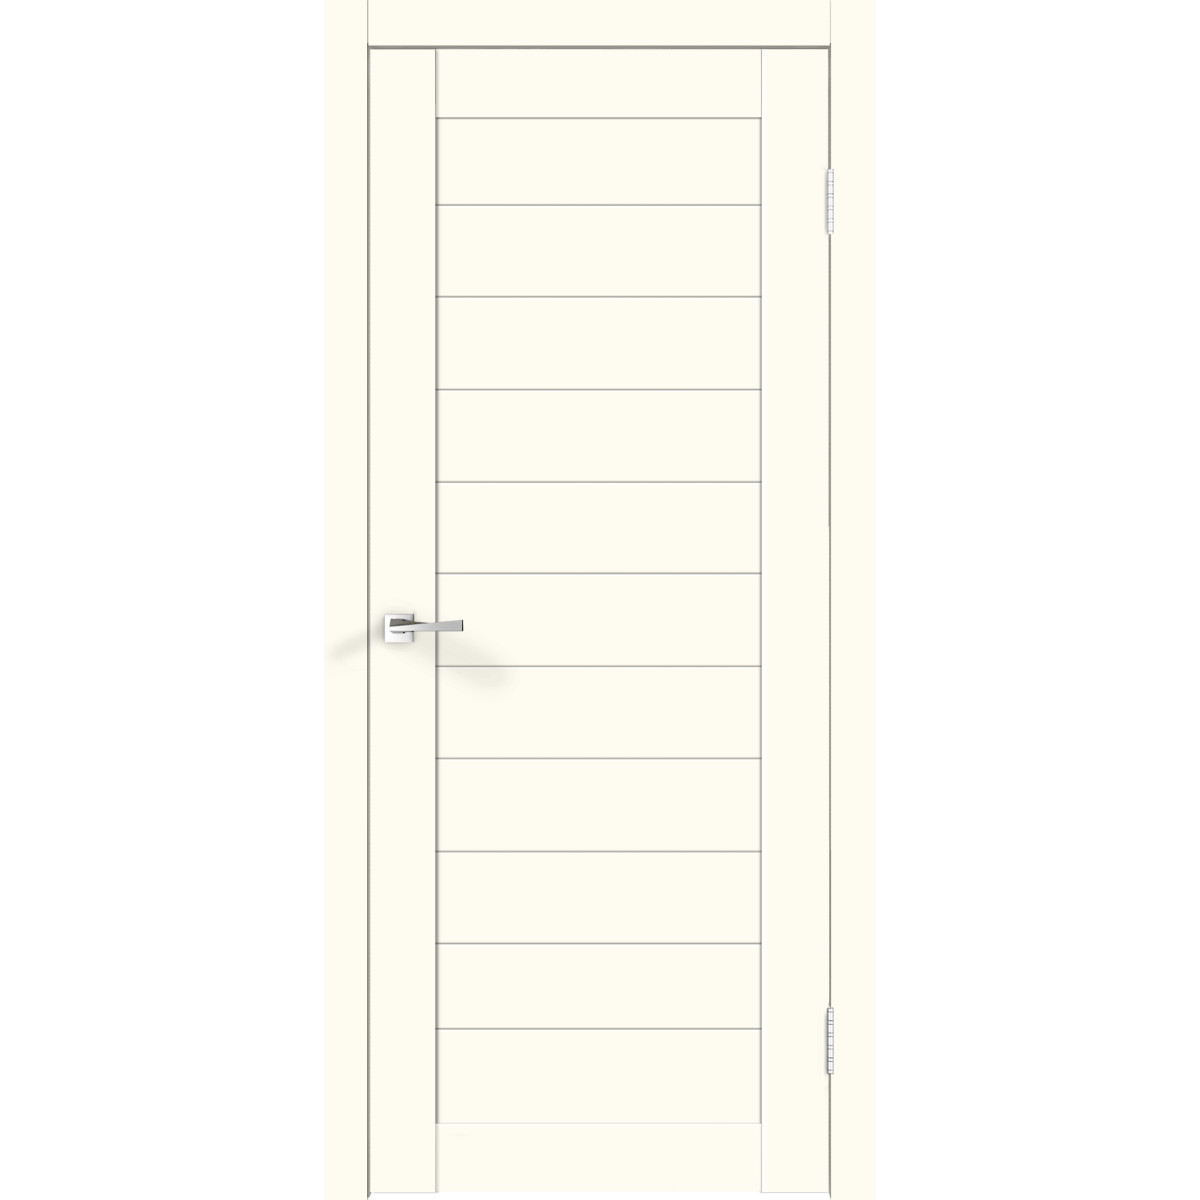 Дверь межкомнатная под покраску Симпл 80х200 см с фурнитурой, цвет белый